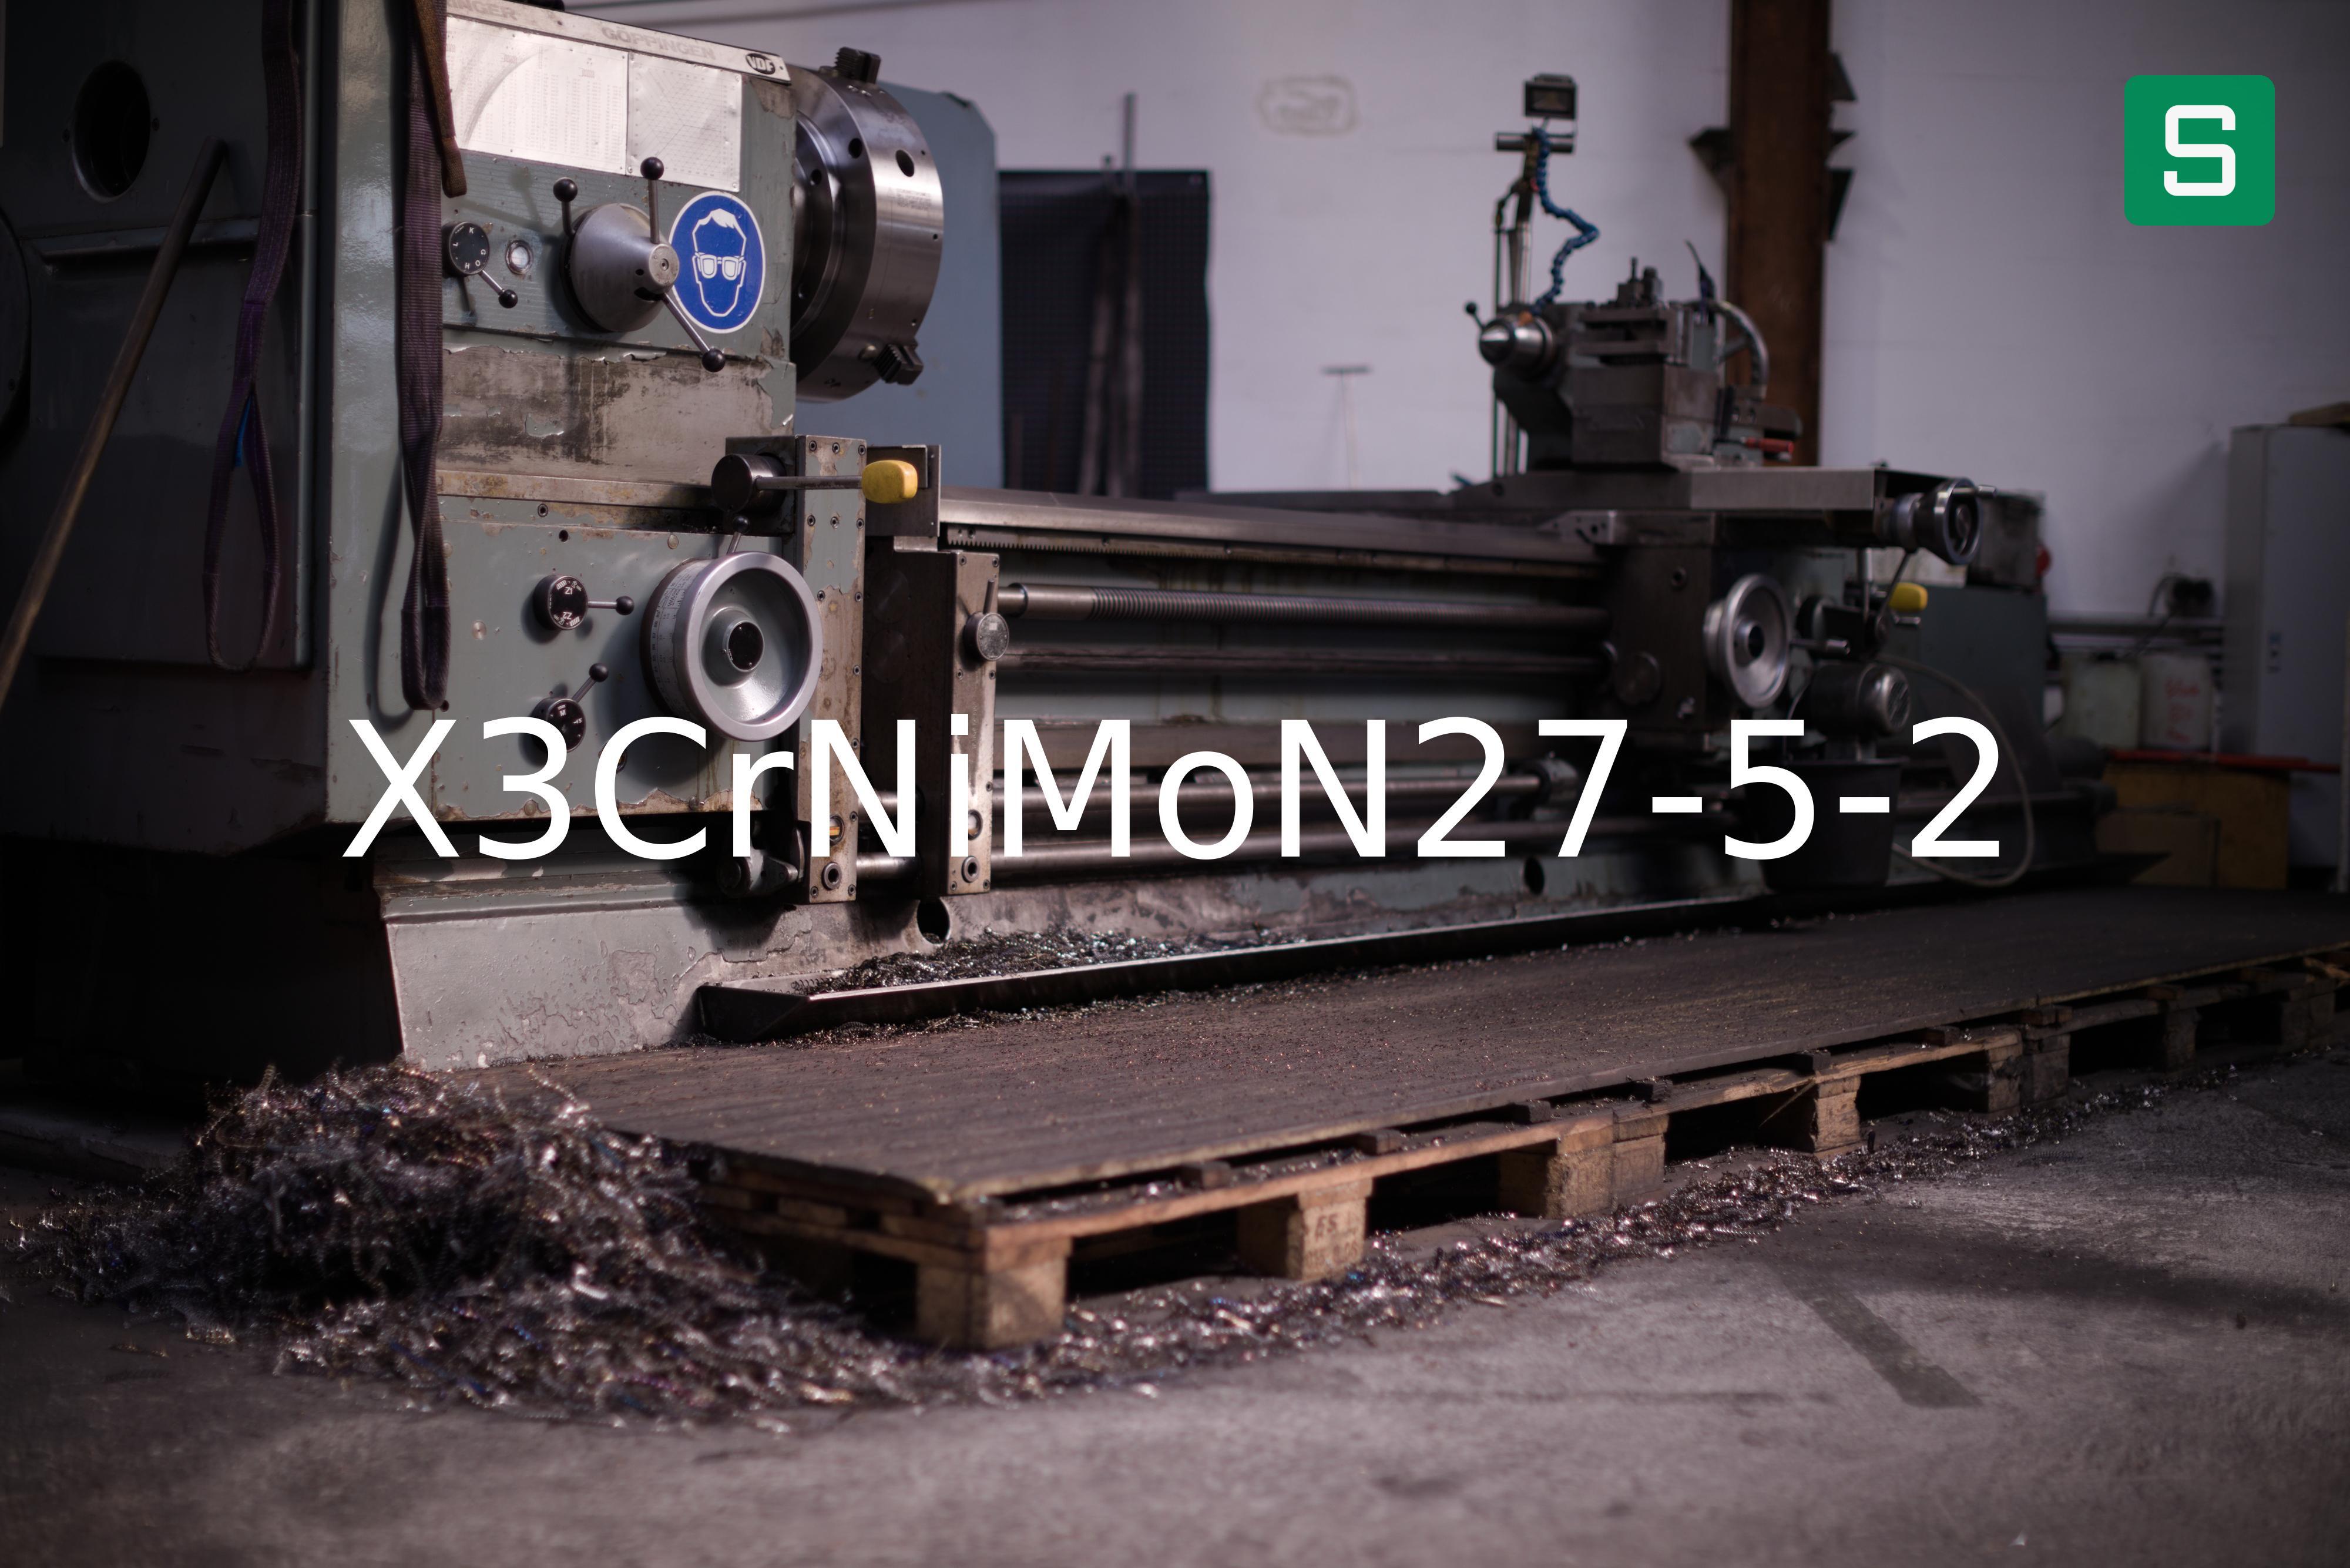 Steel Material: X3CrNiMoN27-5-2